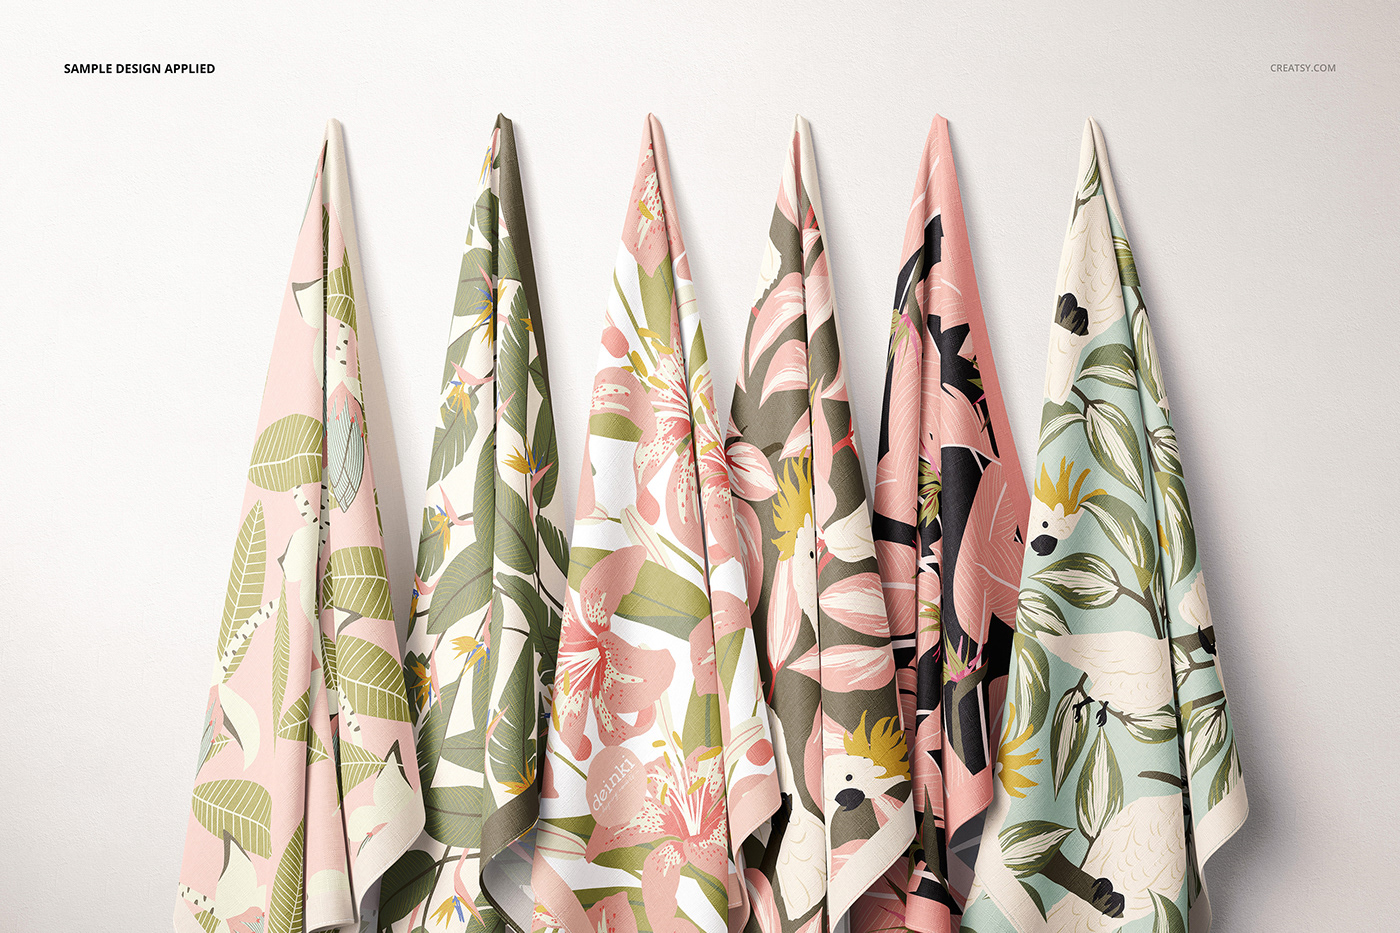 cotton creatsy customizable fabrics mock-up Mockup personalized template Textiles towels